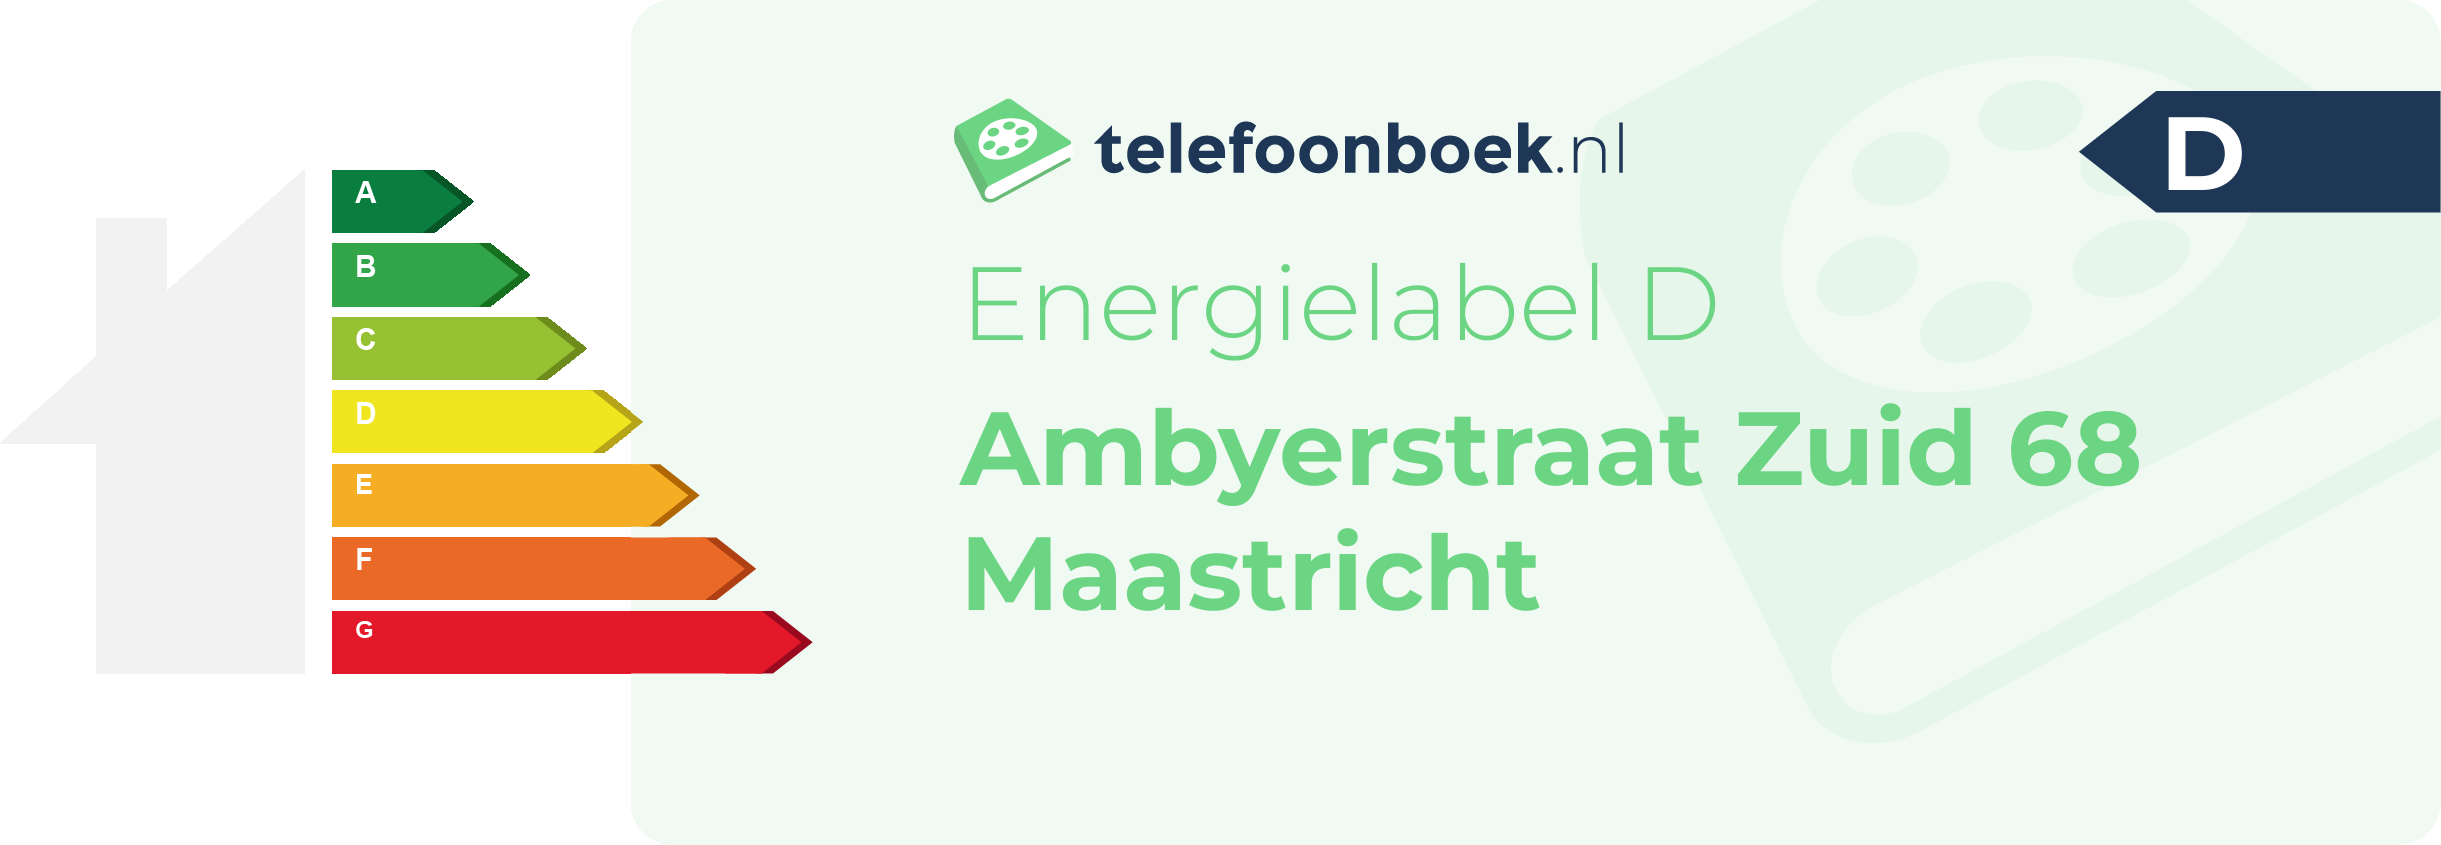 Energielabel Ambyerstraat Zuid 68 Maastricht